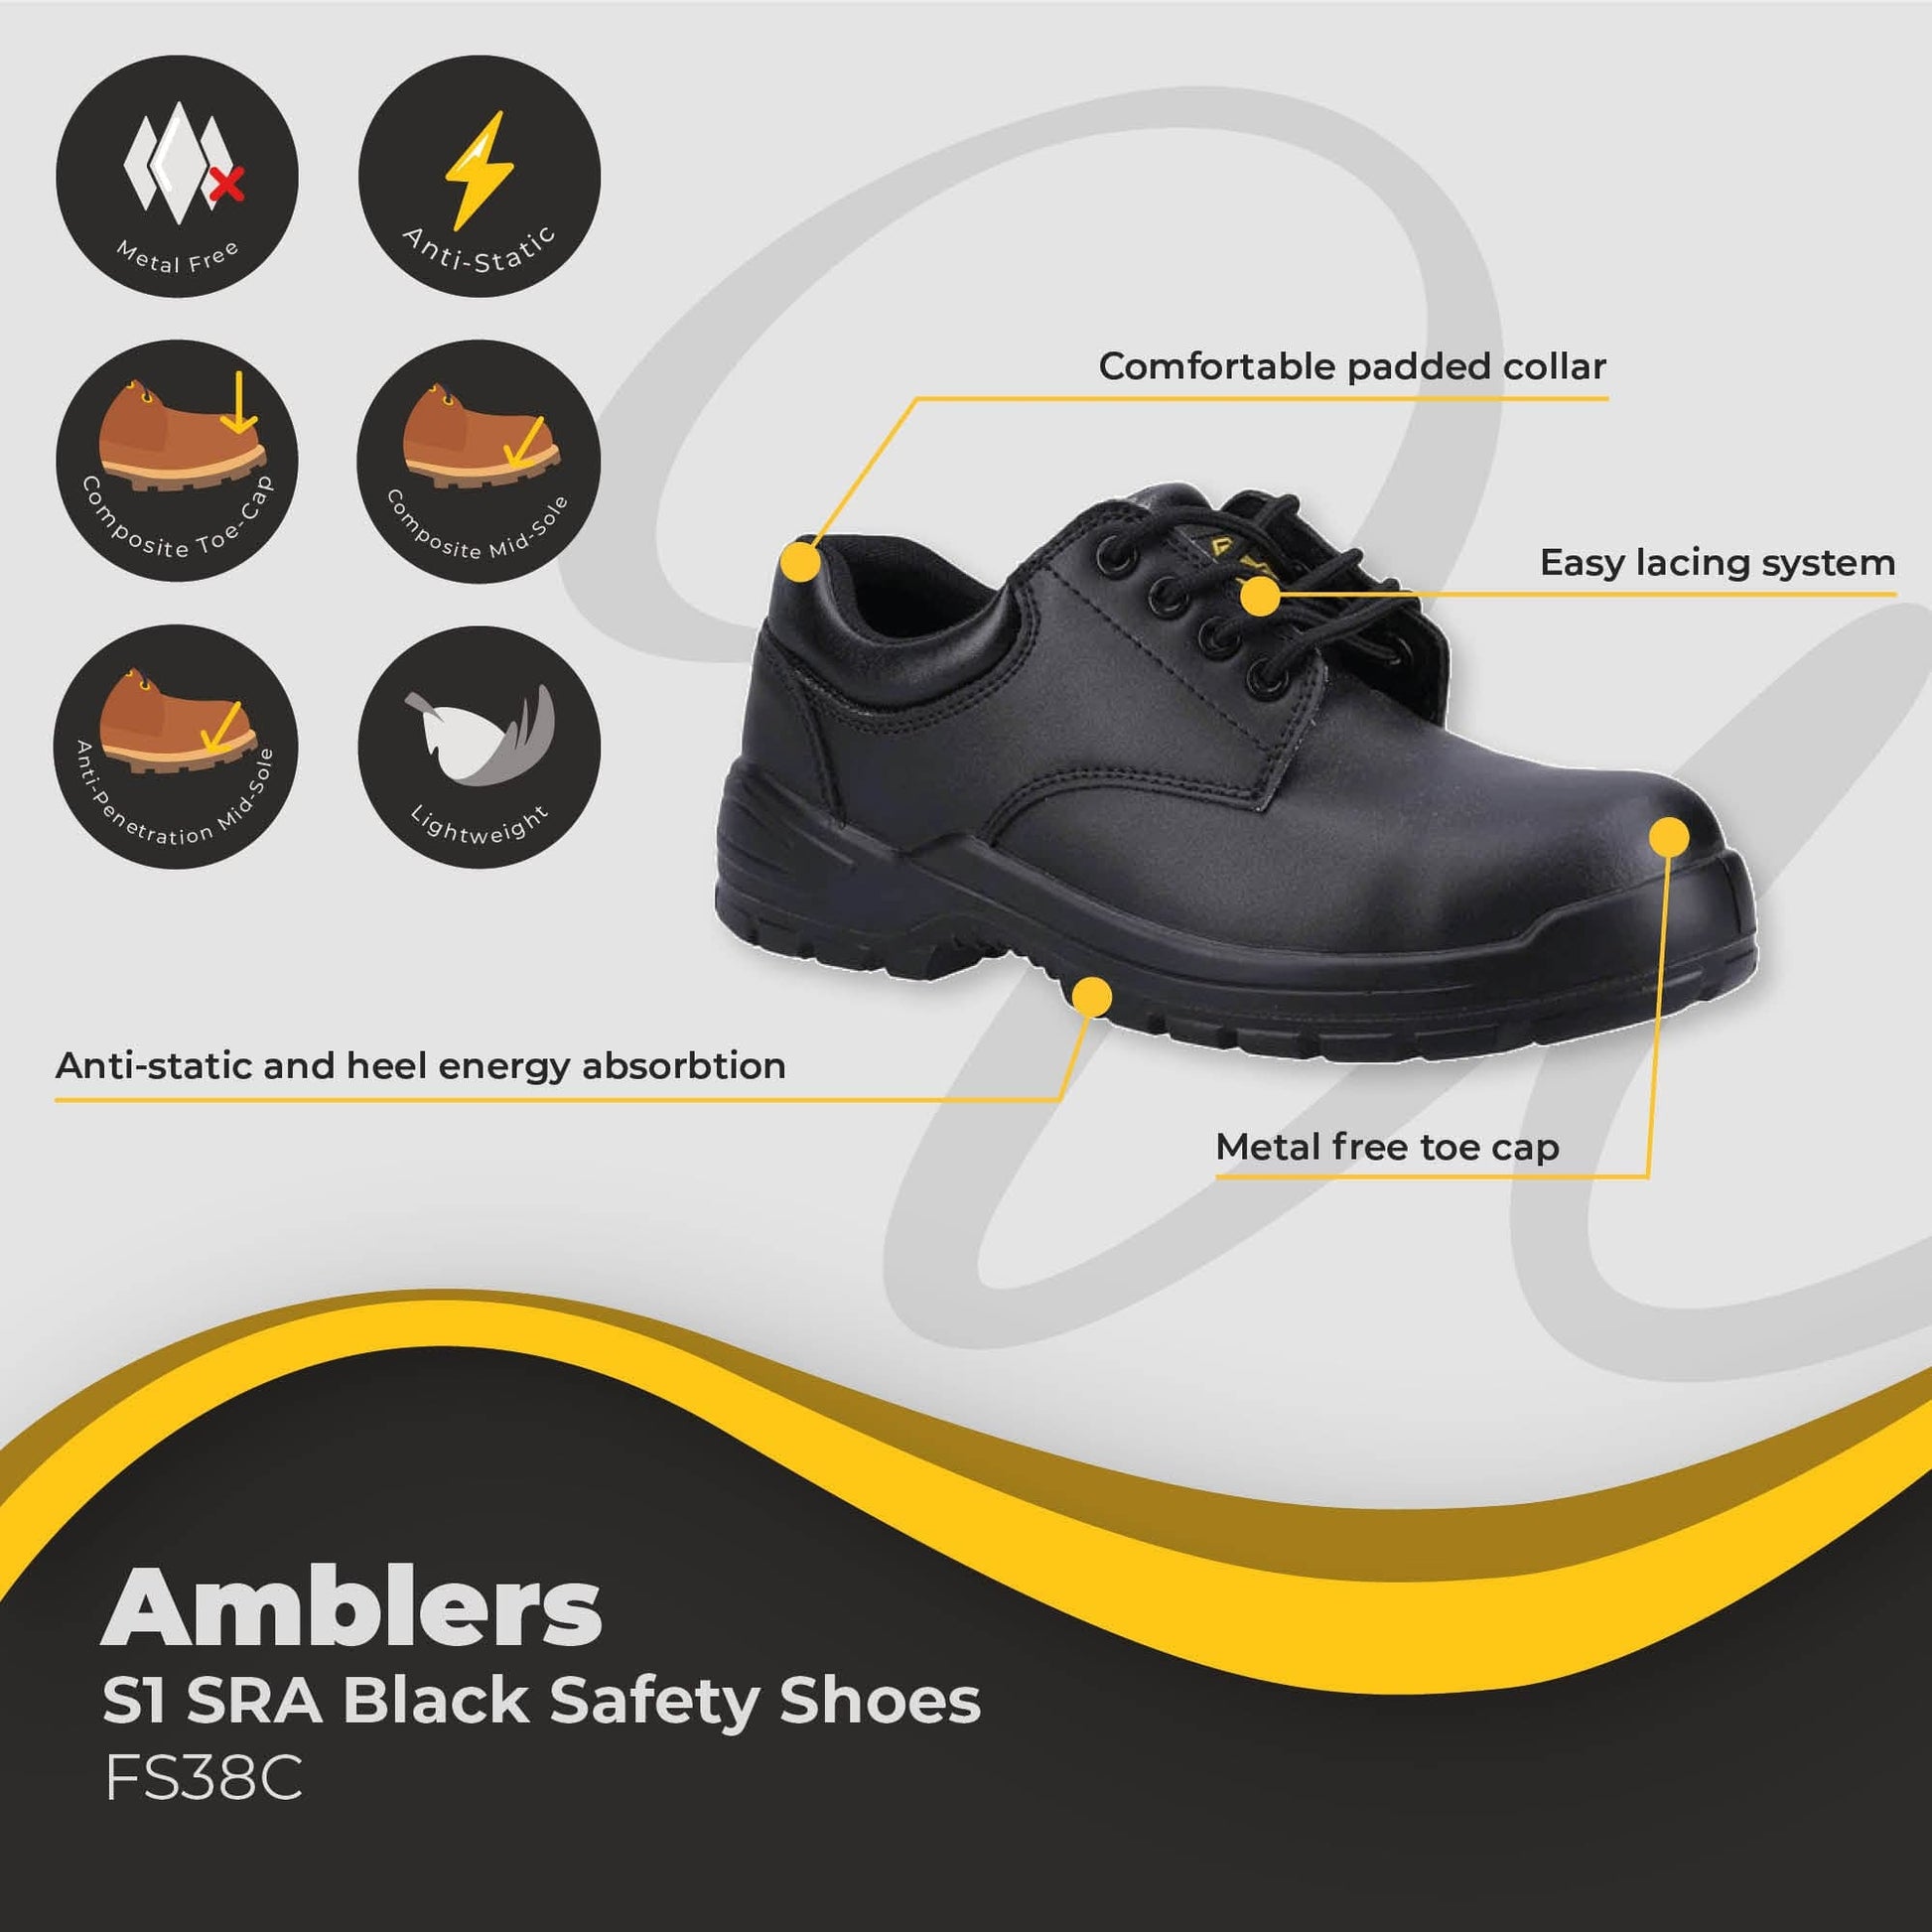 amblers black safety shoes s1 sra fs38c dd399 03